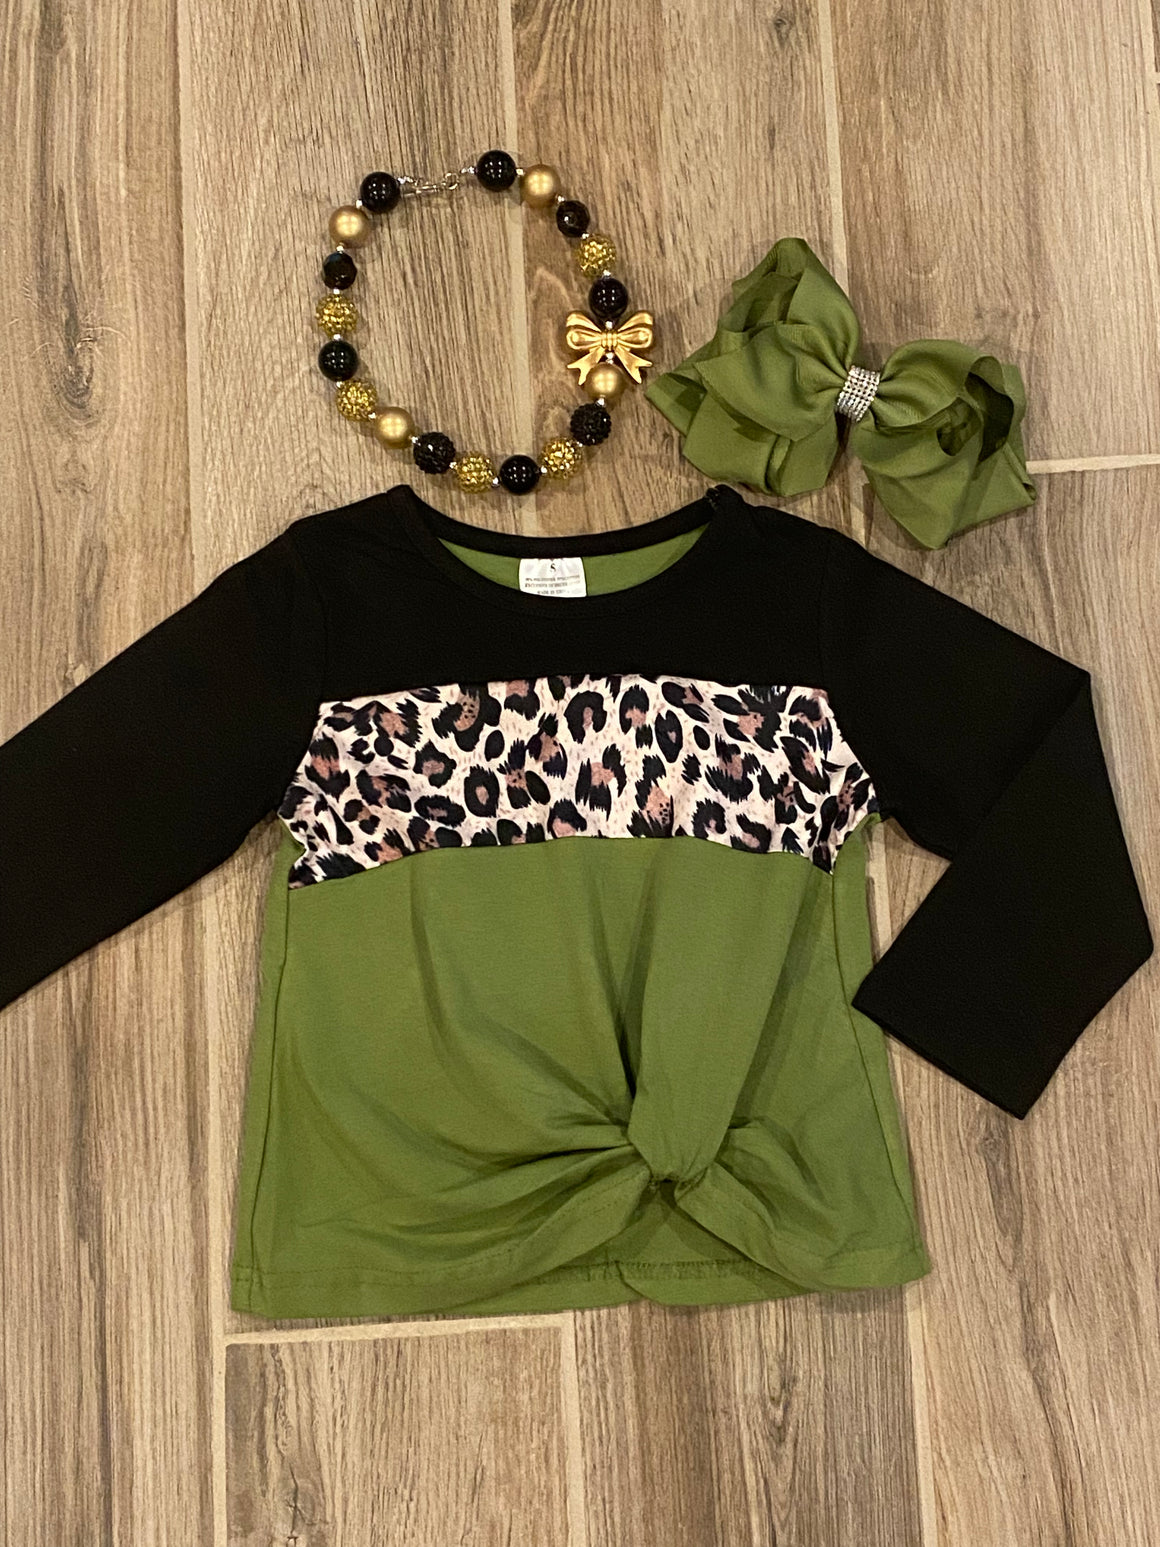 Top - Black/Green Leopard